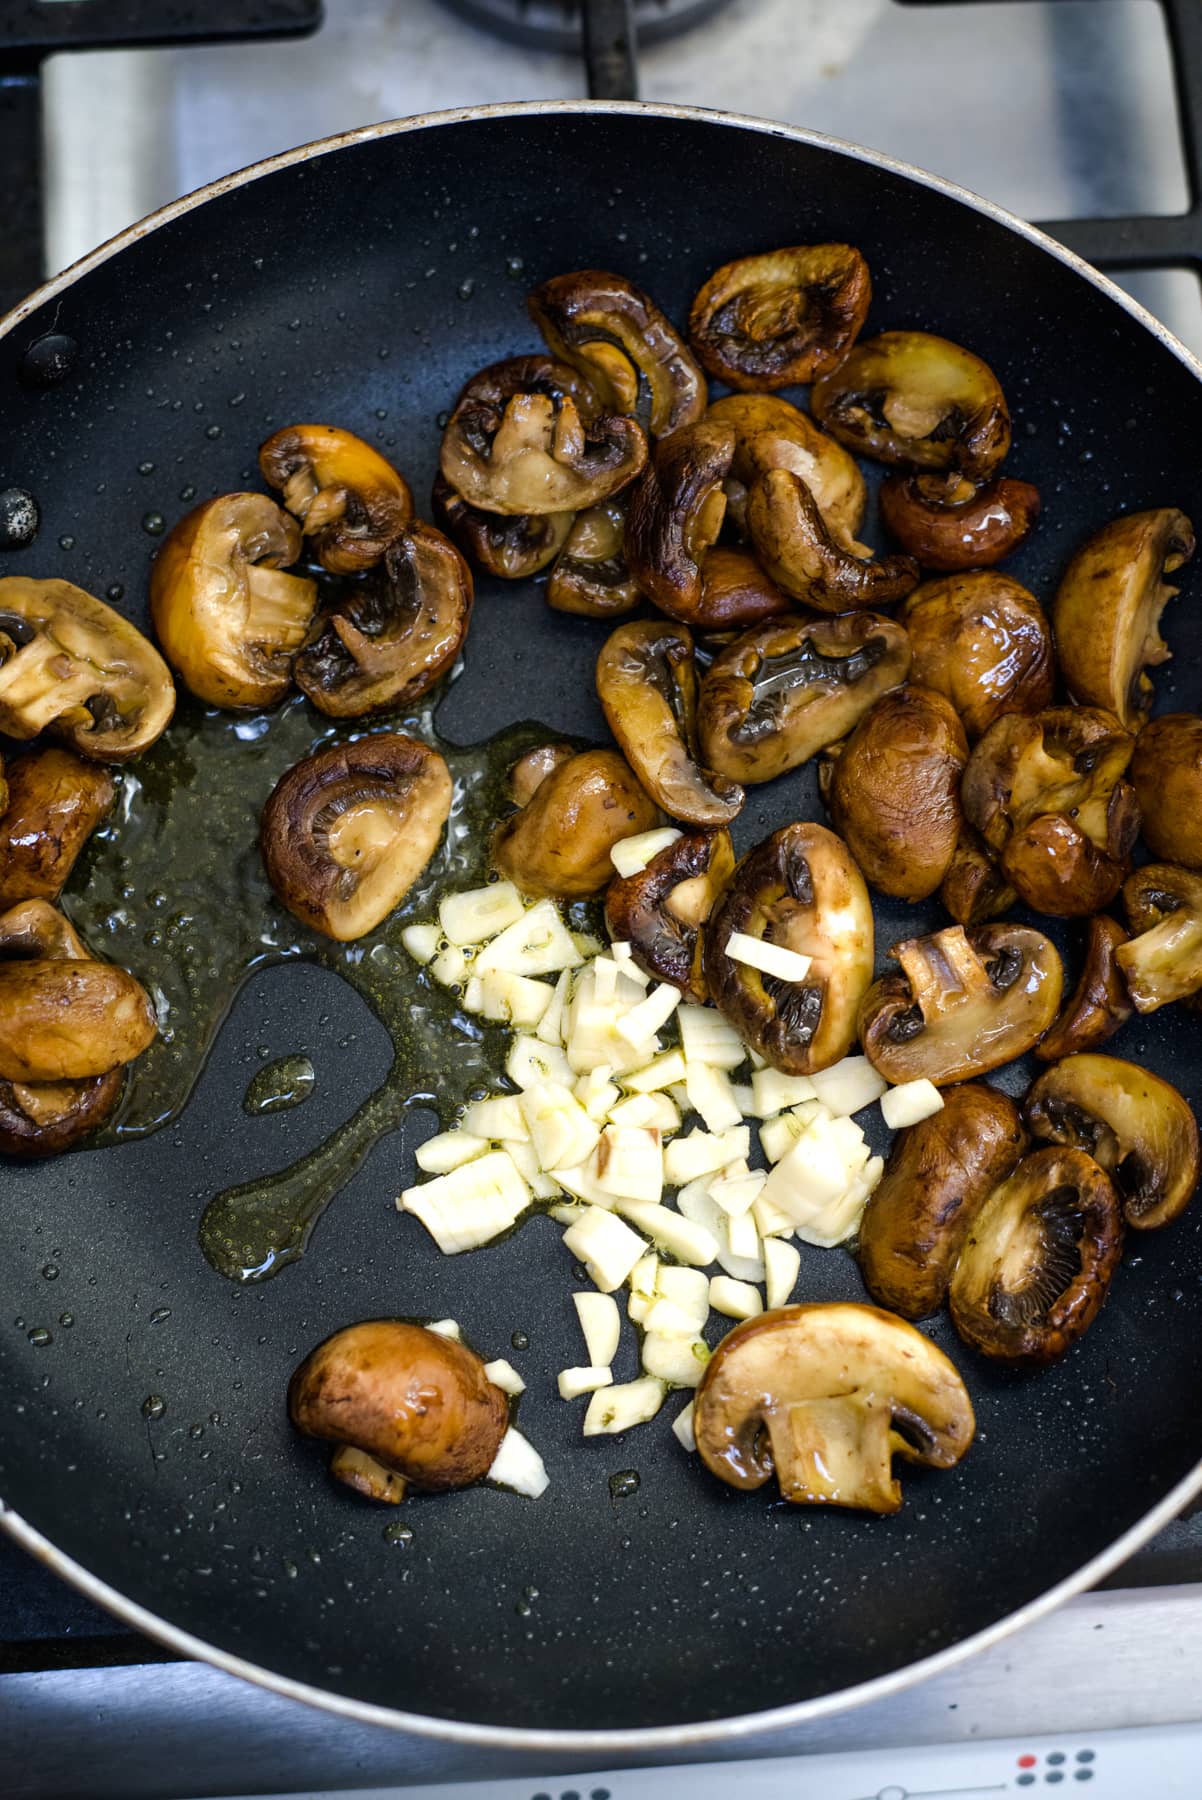 cooked mushrooms and garlic